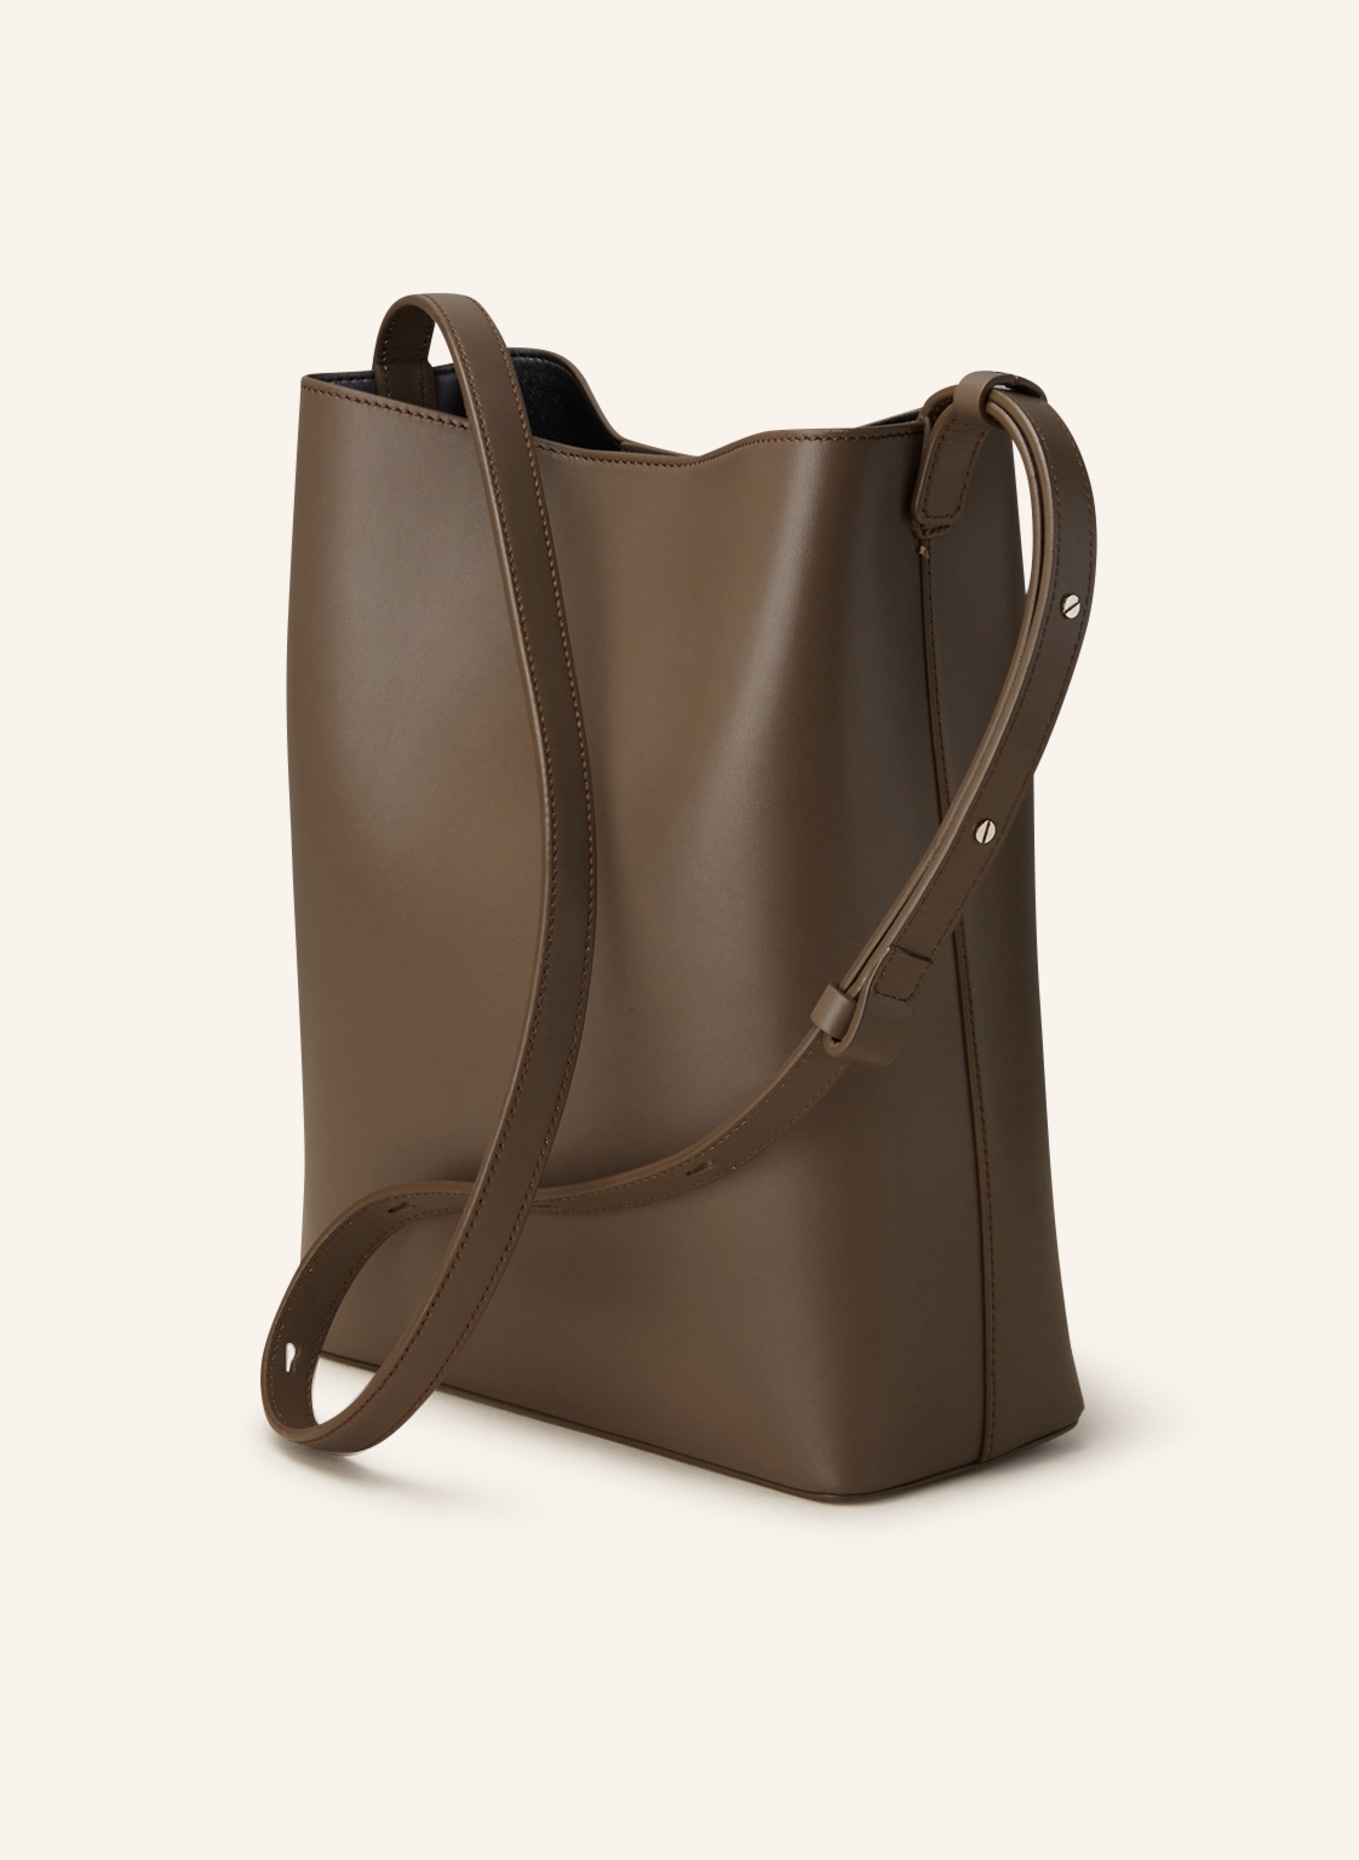 AESTHER EKME Sac Bucket Leather Shoulder Bag for Women